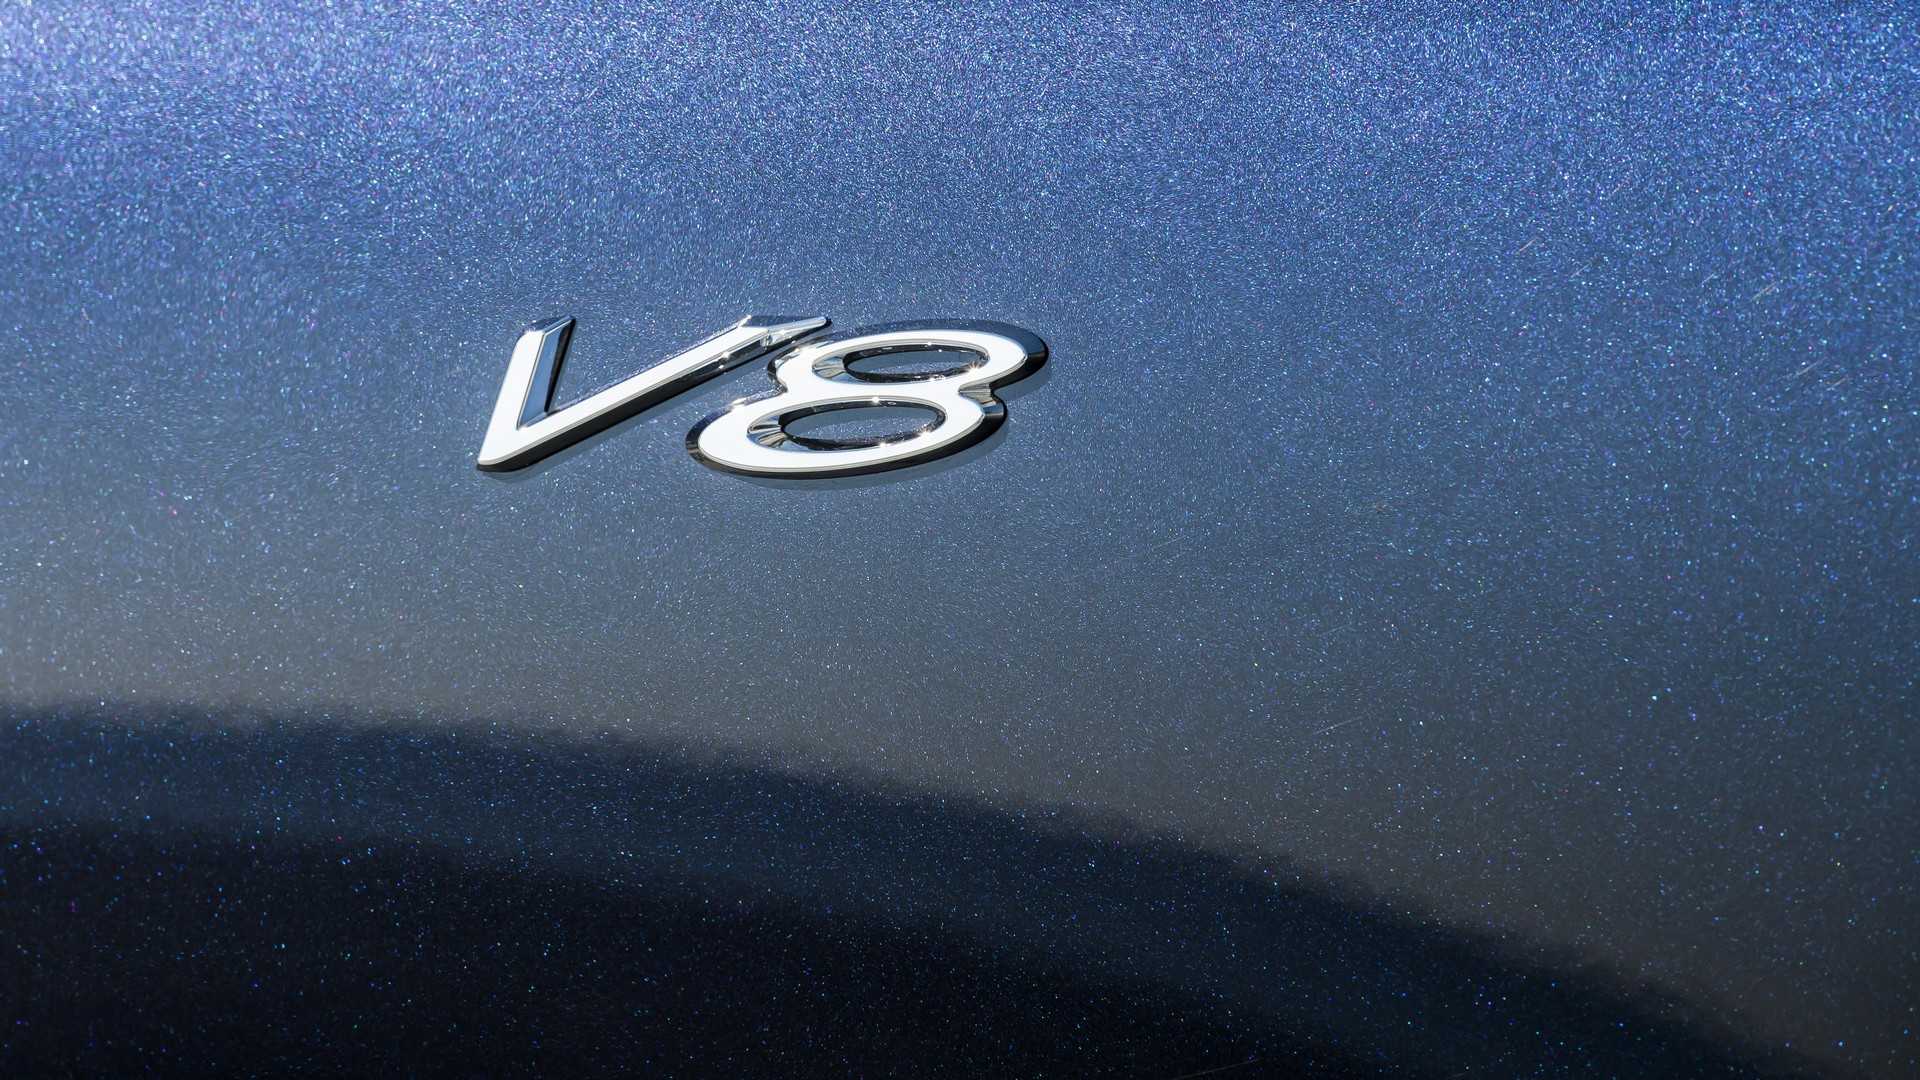 Bentley Continental GT V8